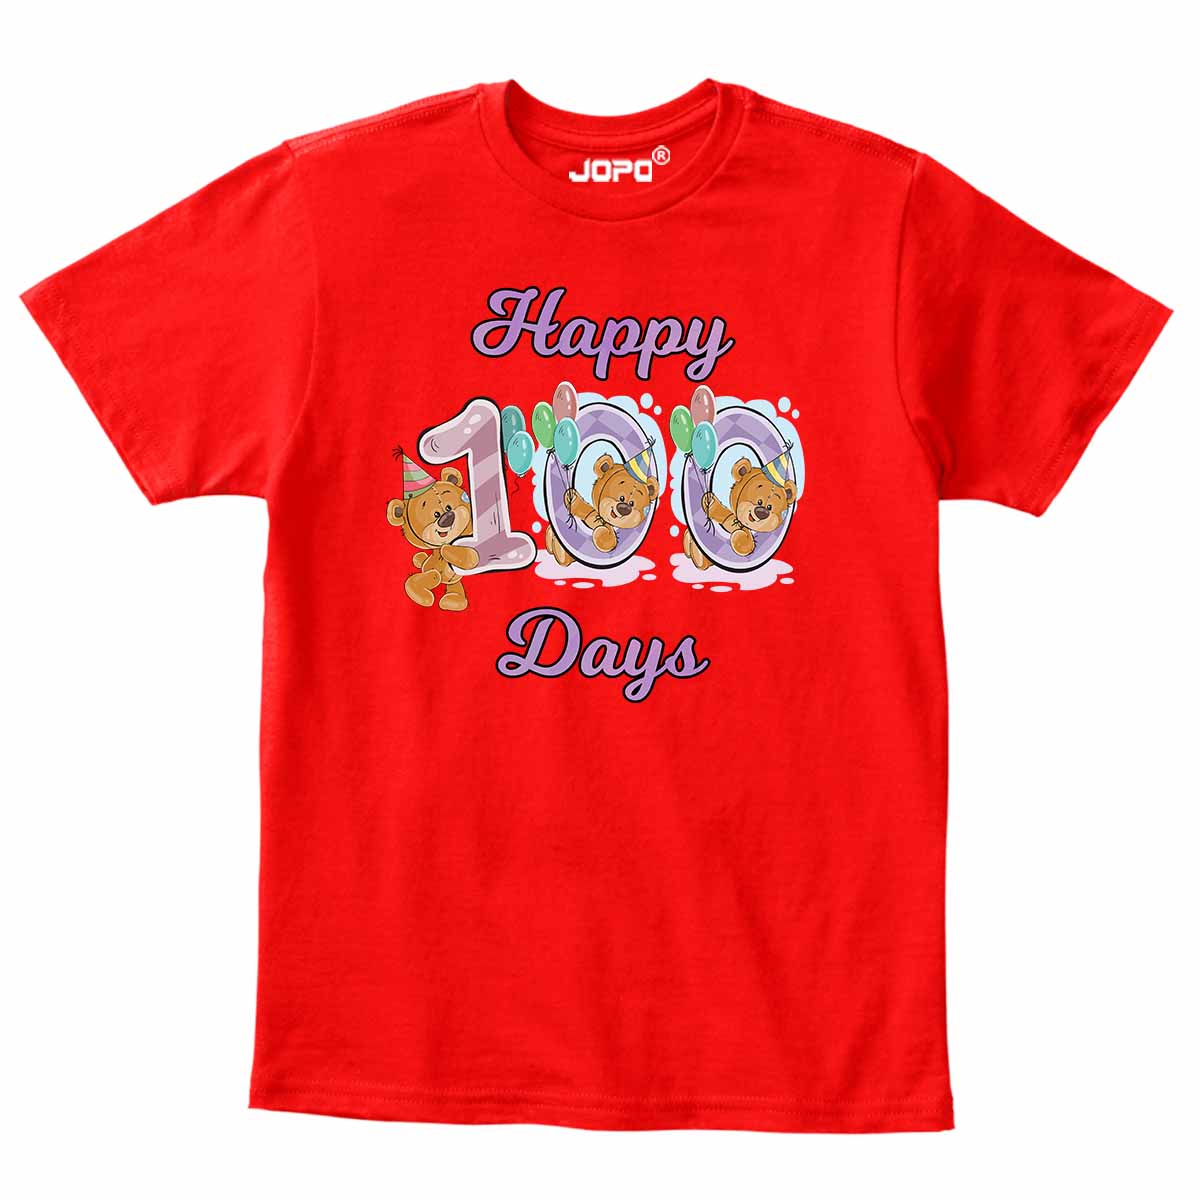 TEDDY HAPPY 100 DAYS RED